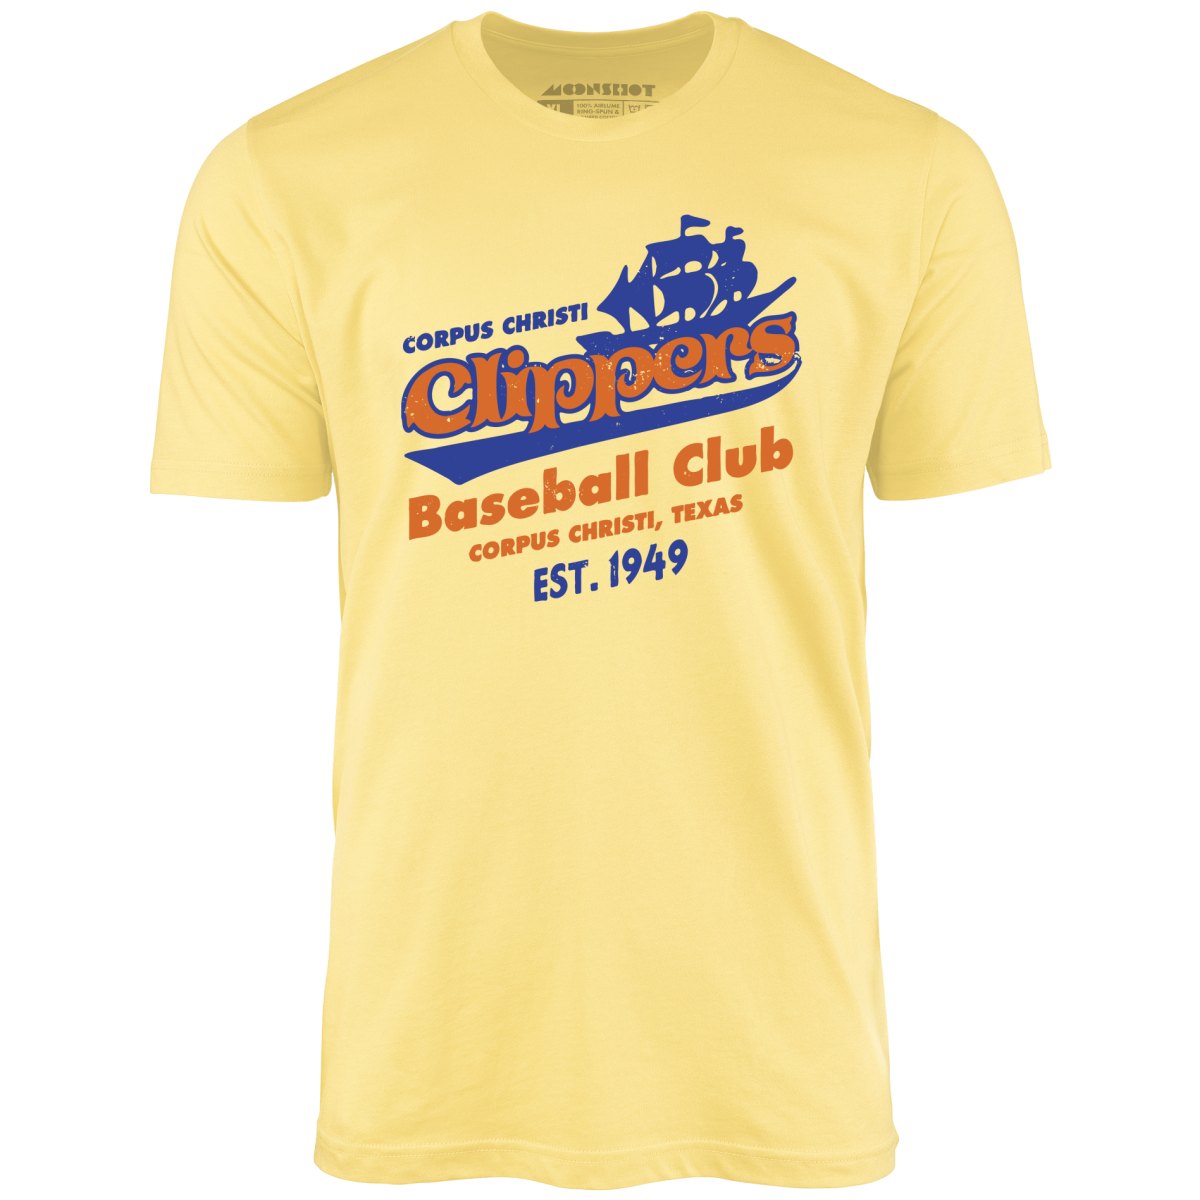 Corpus Christi Clippers - Texas - Vintage Defunct Baseball Teams - Unisex T-Shirt